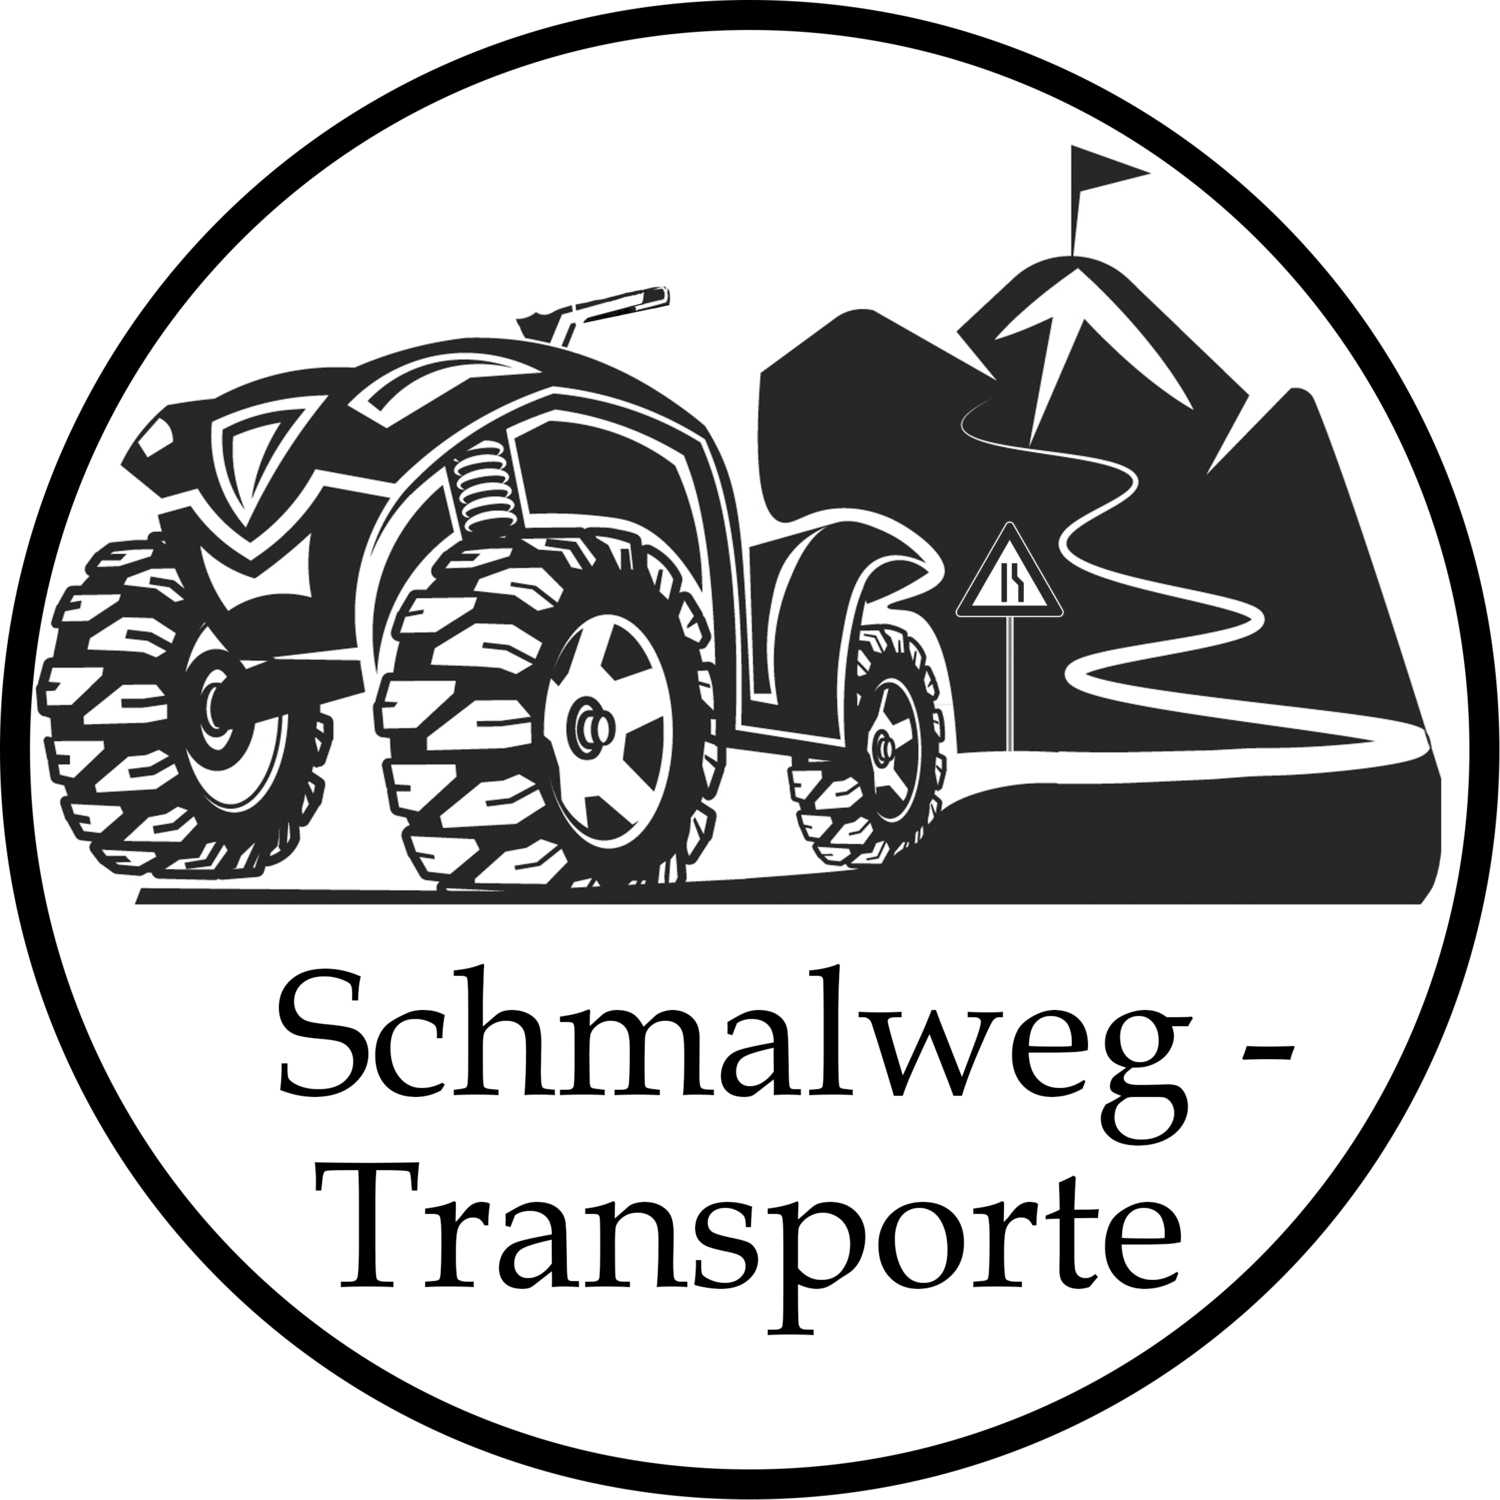 Schmalweg-Transporte